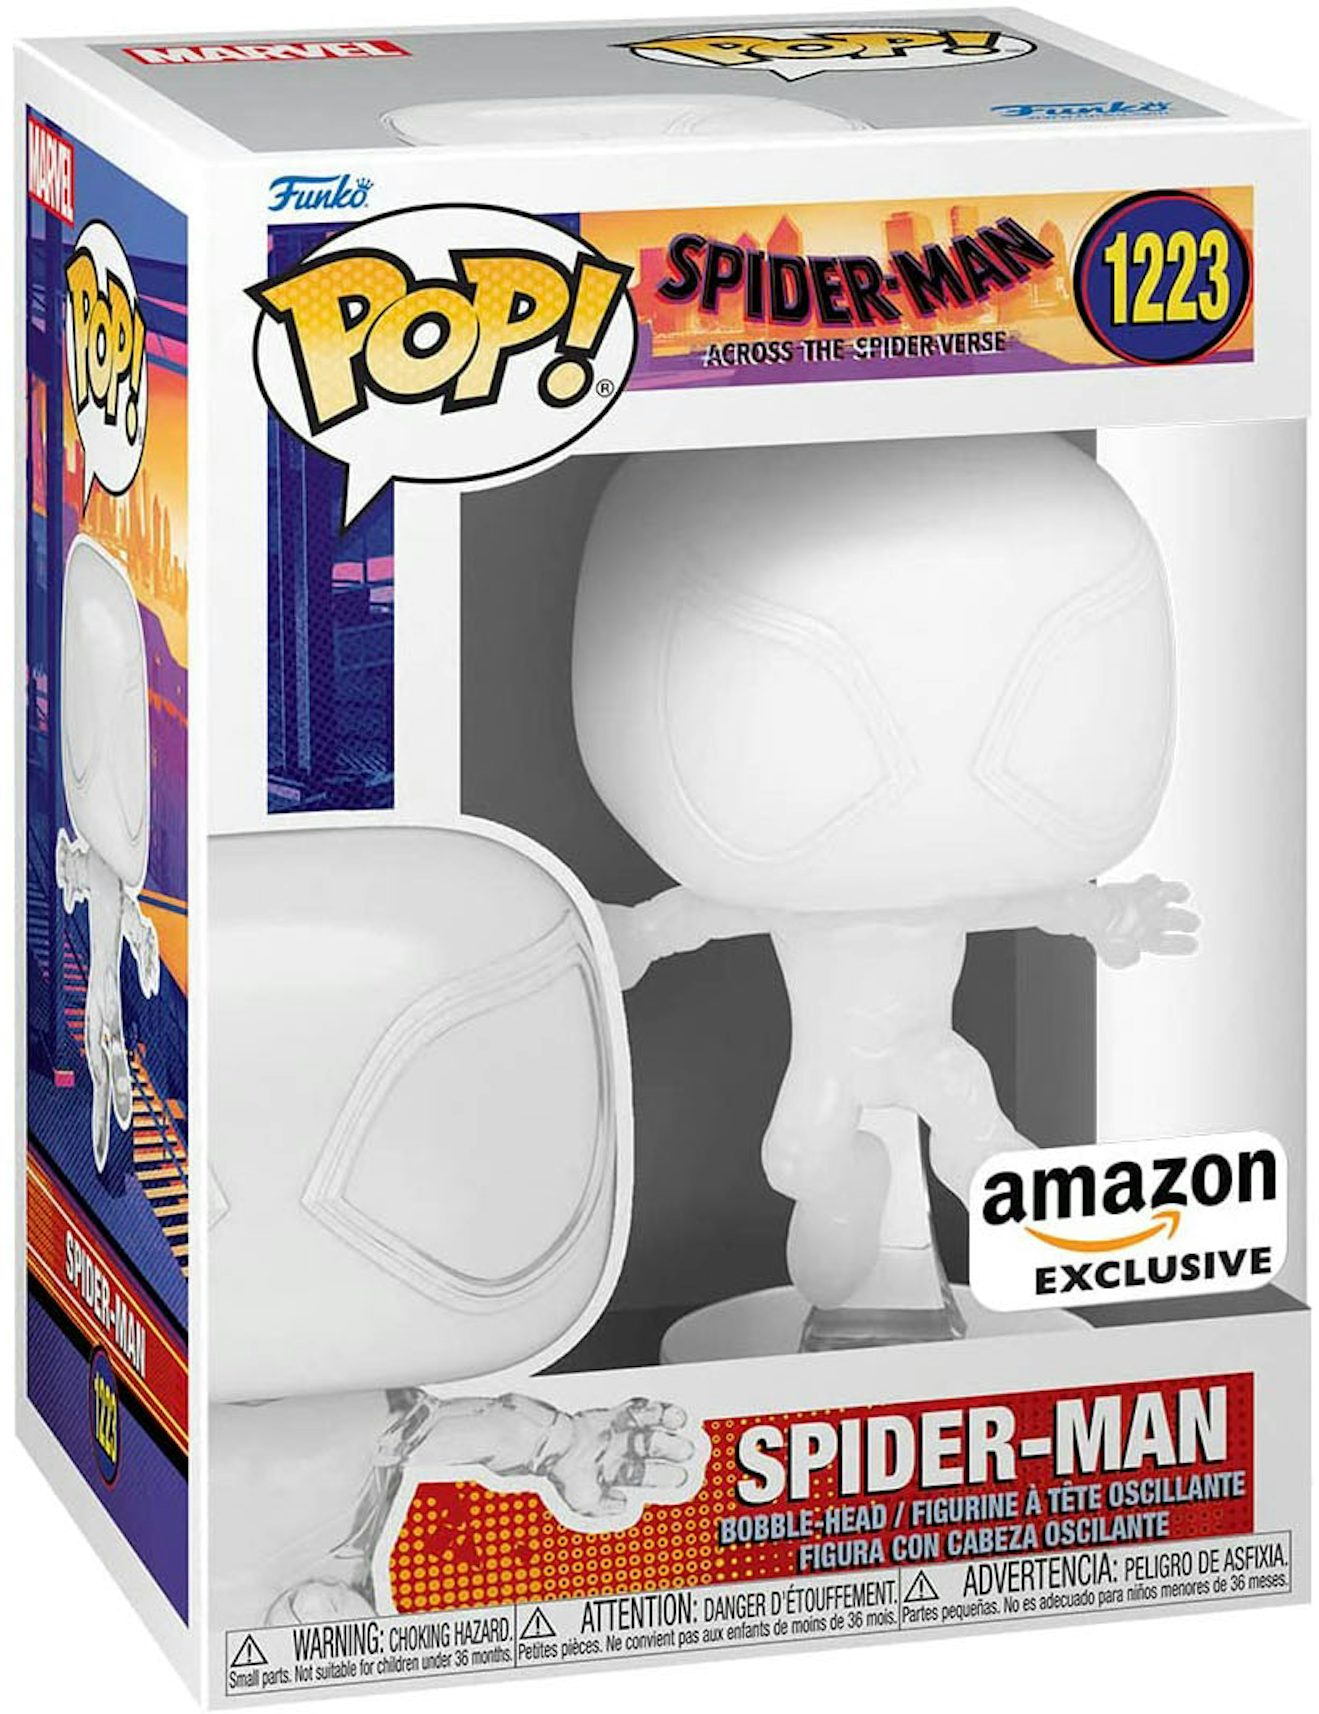 https://images.stockx.com/images/Funko-Pop-Marvel-Spider-Man-Across-the-Spider-Verse-Spider-Man-Amazon-Exclusive-Figure-1223.jpg?fit=fill&bg=FFFFFF&w=1200&h=857&fm=jpg&auto=compress&dpr=2&trim=color&updated_at=1677307576&q=60